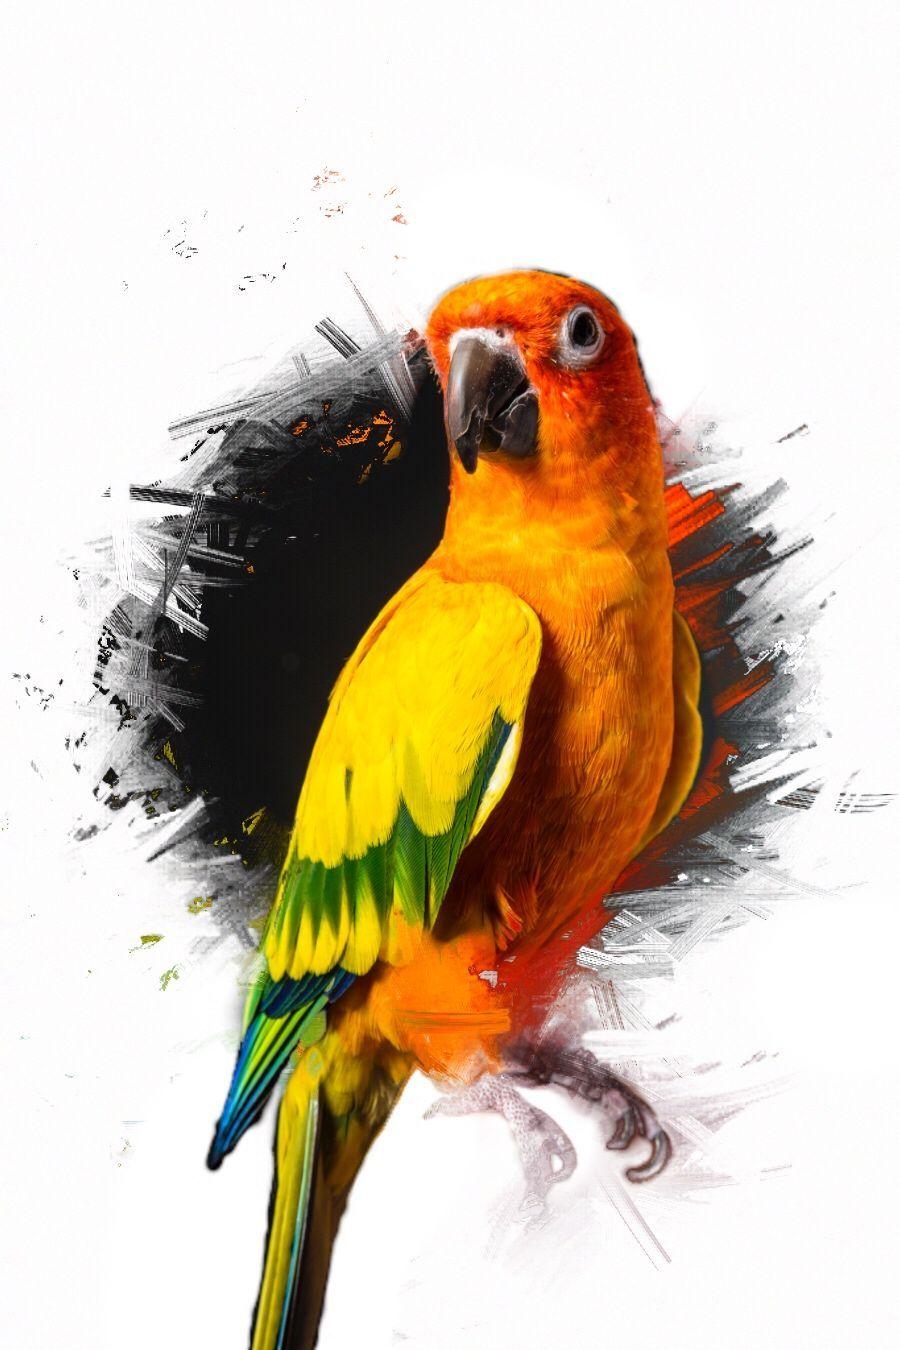 Maveric Logang Logo - Maverick the parrot | ramdom | Logan paul, Logan, Maverick logan paul